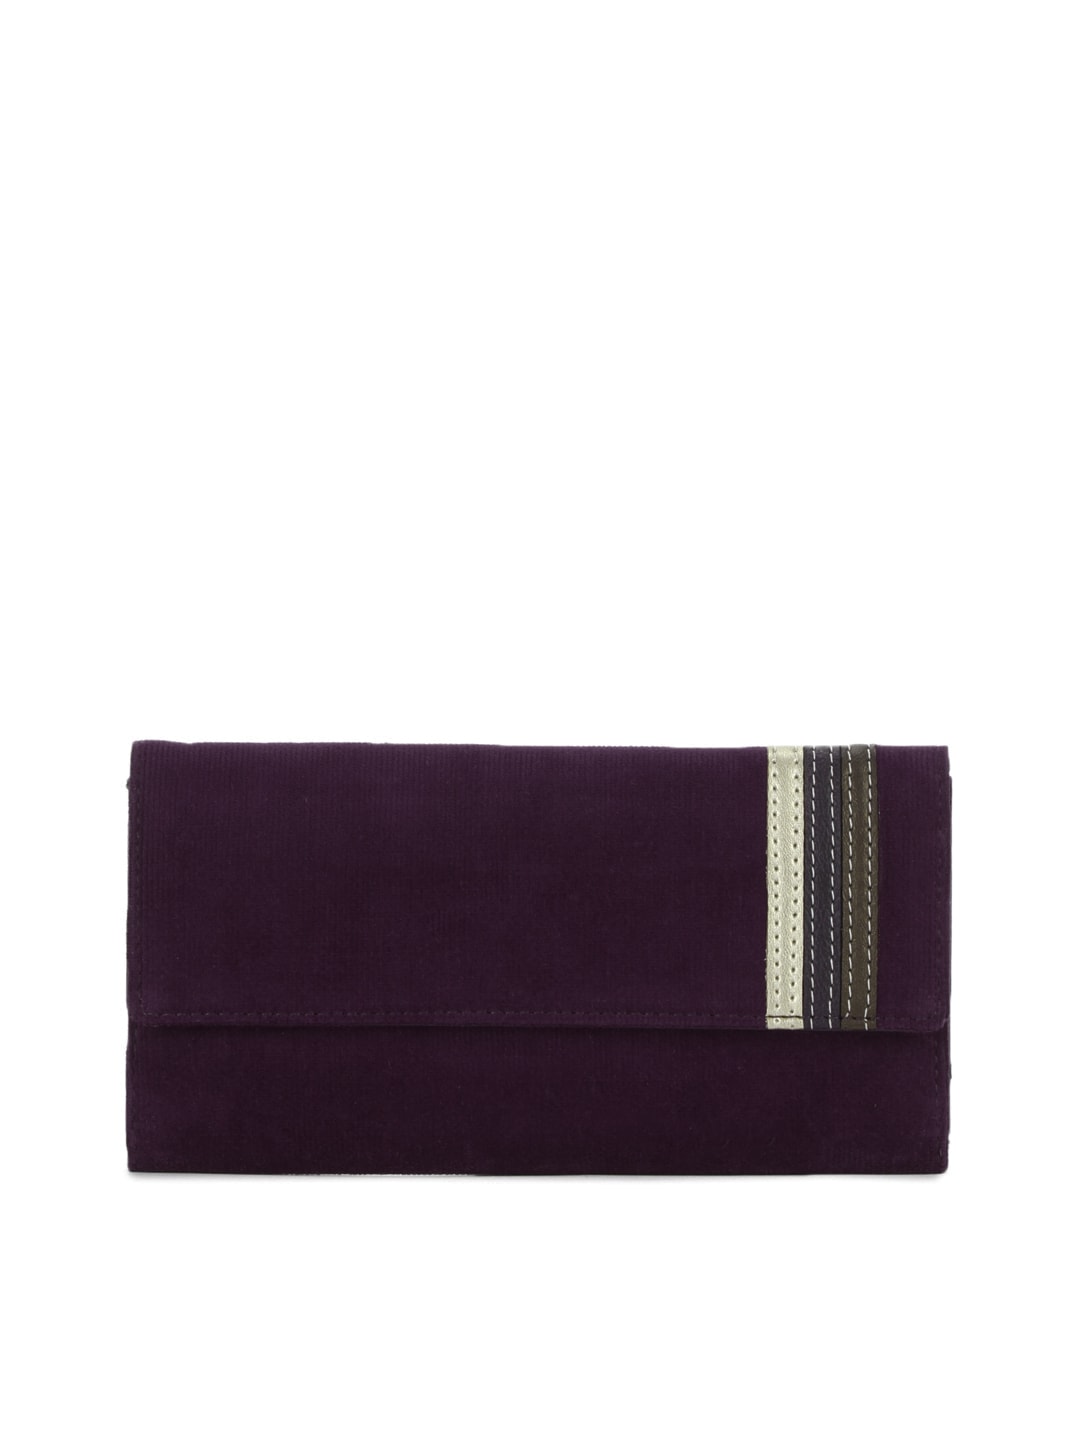 Baggit Women Luggage Baby Purple Wallet